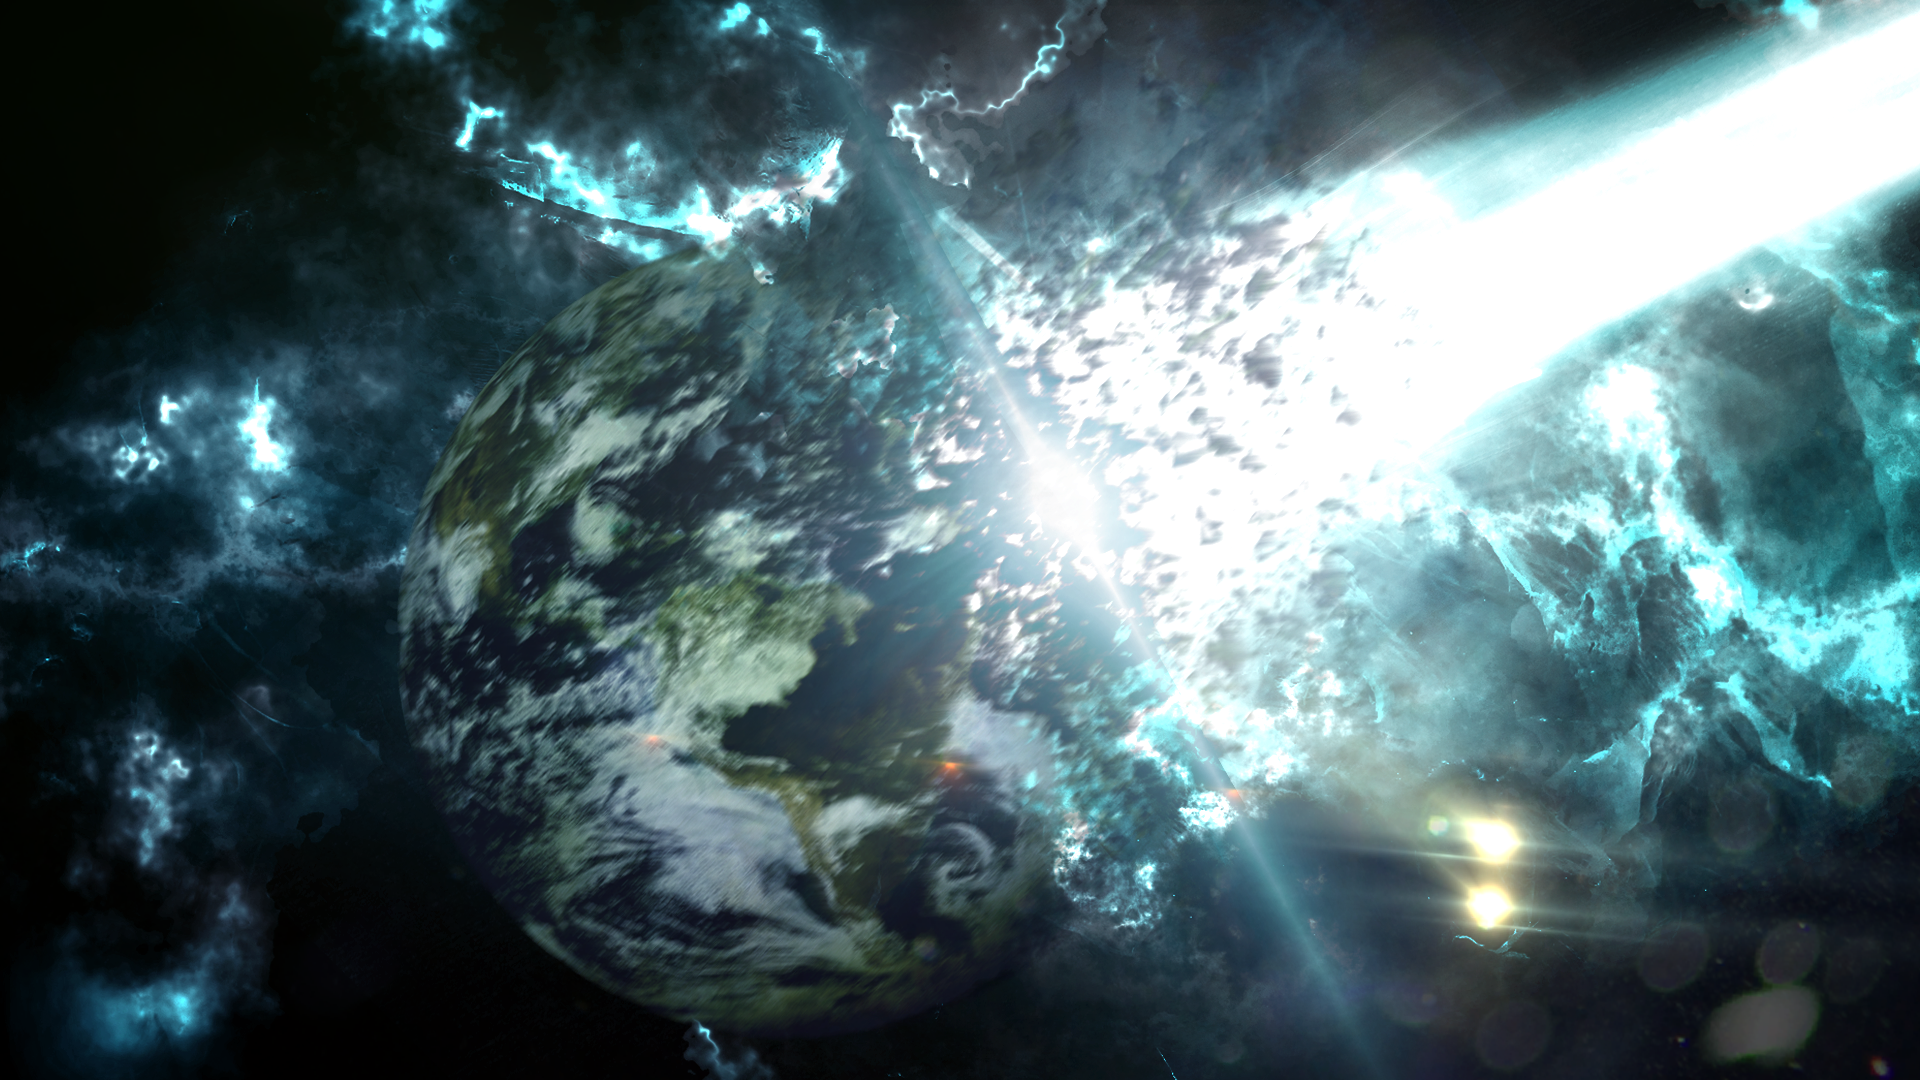 Space Meteors Earth Apocalyptic Destruction Science Fiction Digital Art Space Art 1920x1080